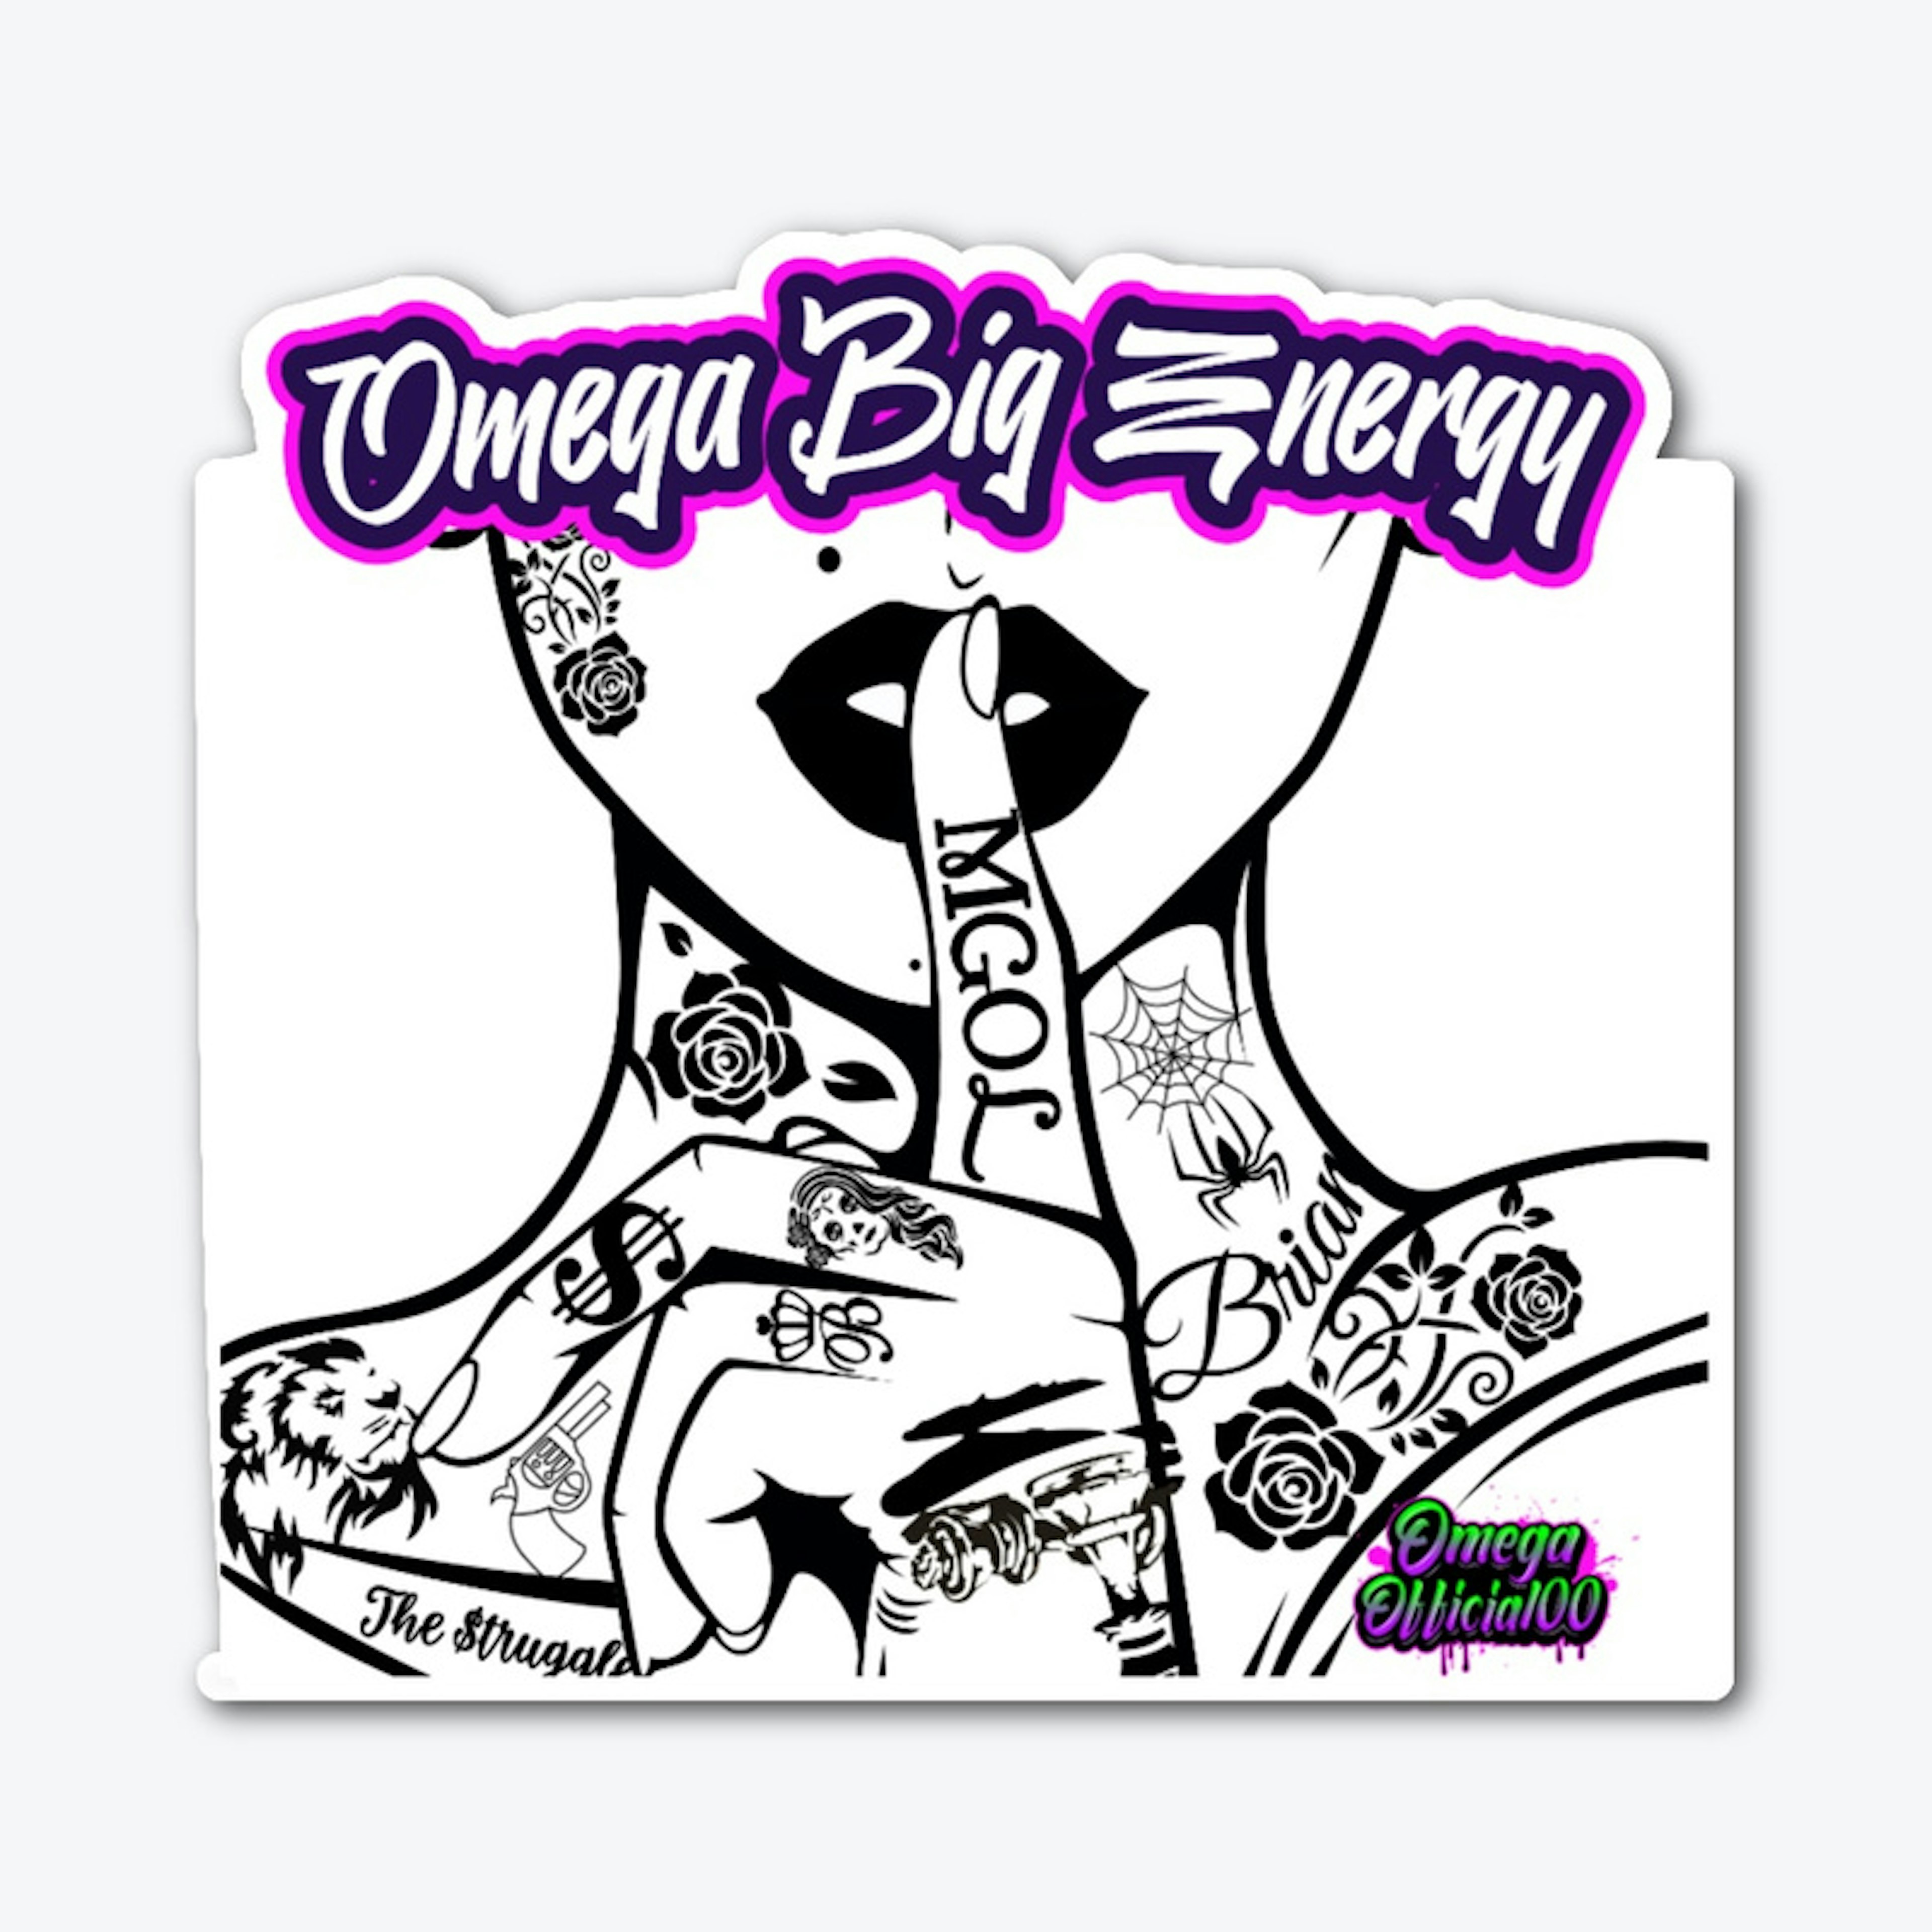 Omega Big Energy is OMEGA OFFICIAL 00